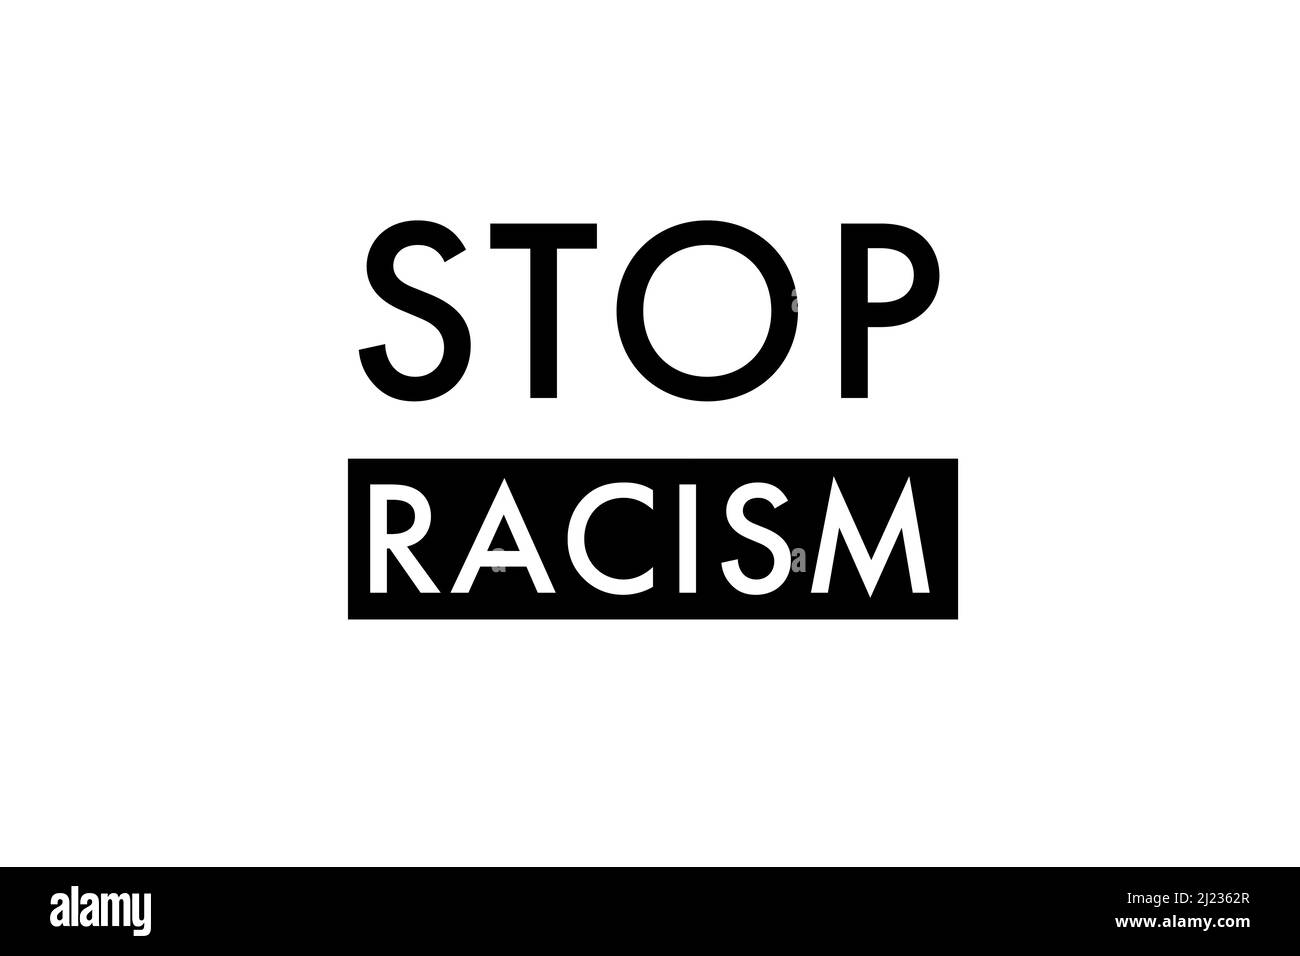 Stoppen Sie Rassismus. Potest Action Poster, Banner oder Hintergrund Konzept Illustration. Stockfoto